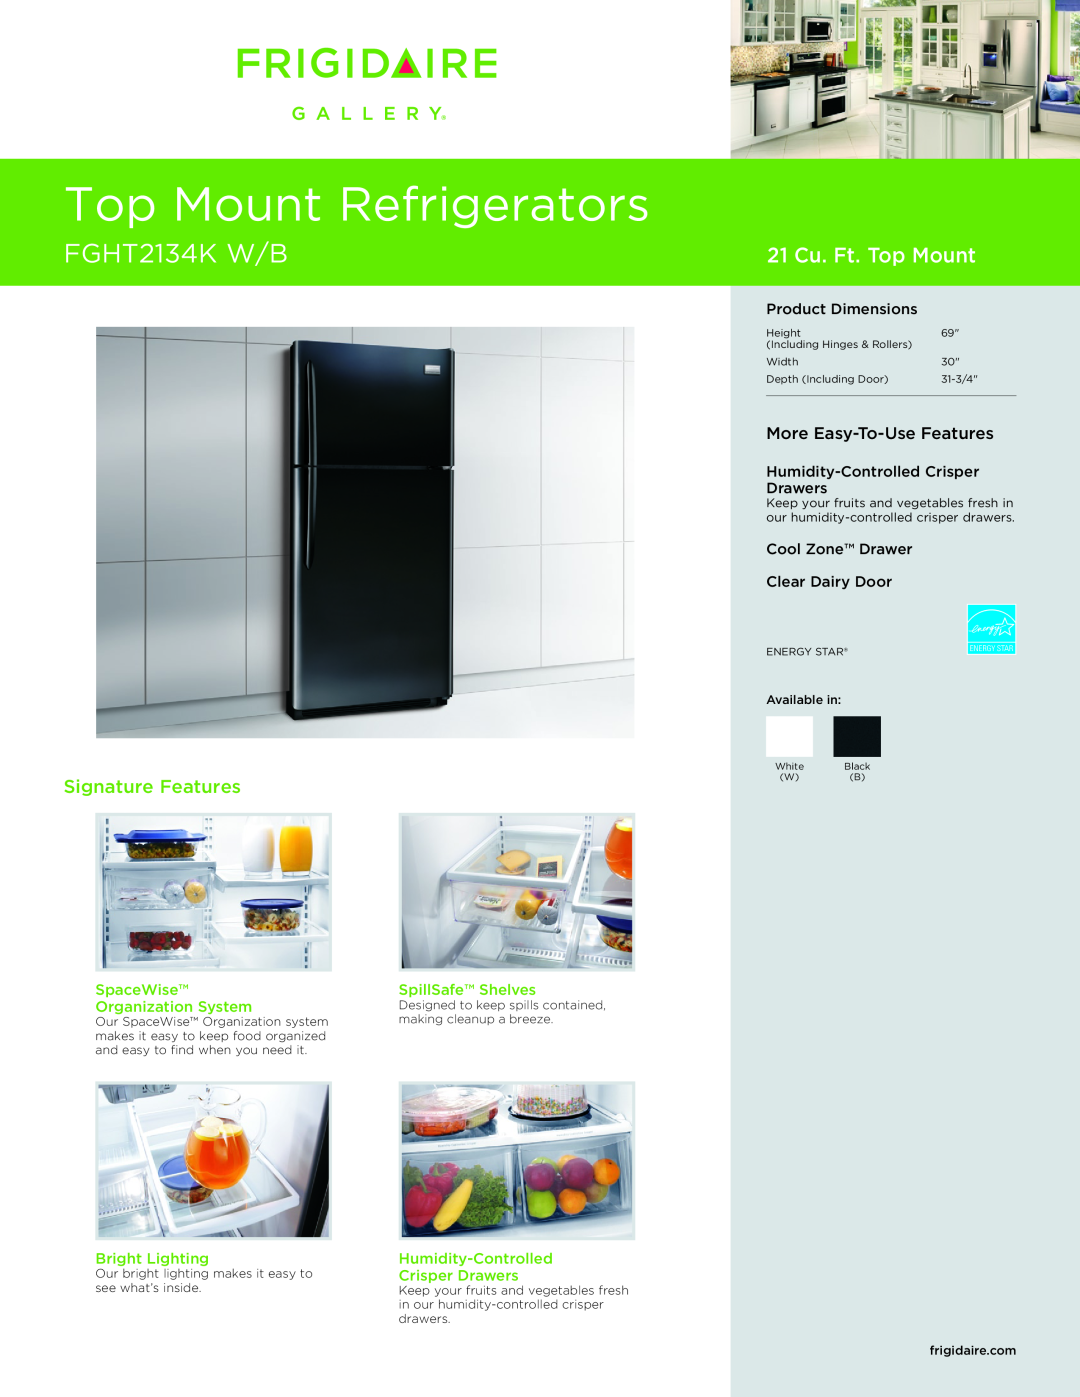 Frigidaire FGHT2134K W/B dimensions Top Mount Refrigerators, 21 Cu. Ft. Top Mount, Signature Features, Product Dimensions 